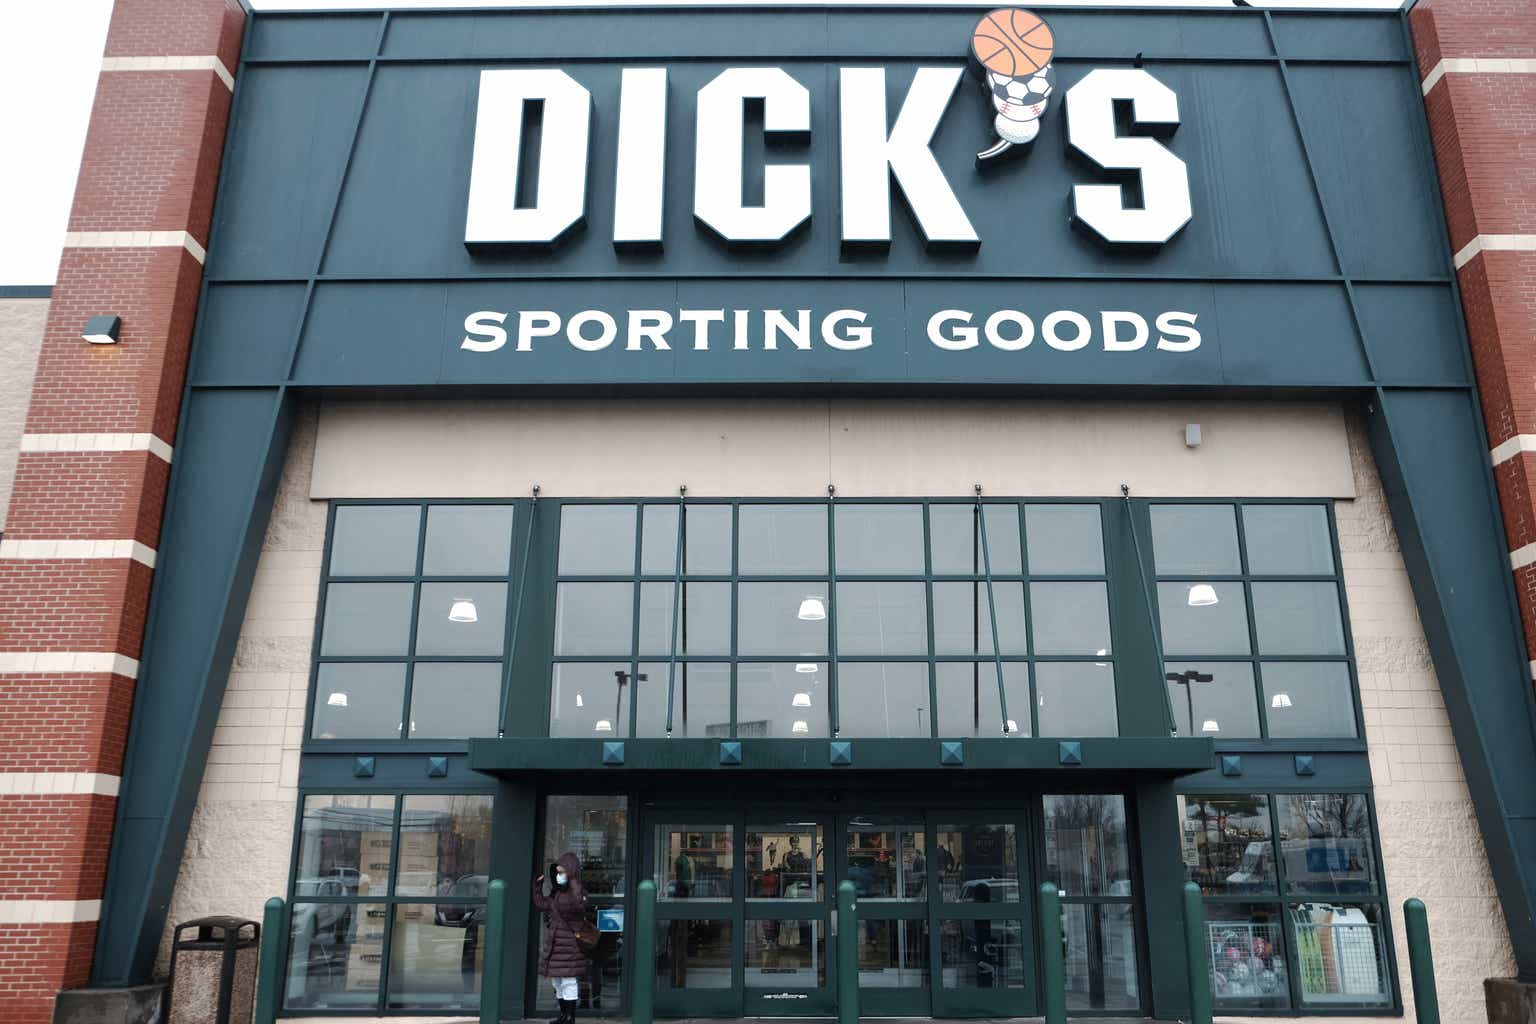 Dick's Sporting Goods (DKS): Company Profile, Stock Price, News, Rankings